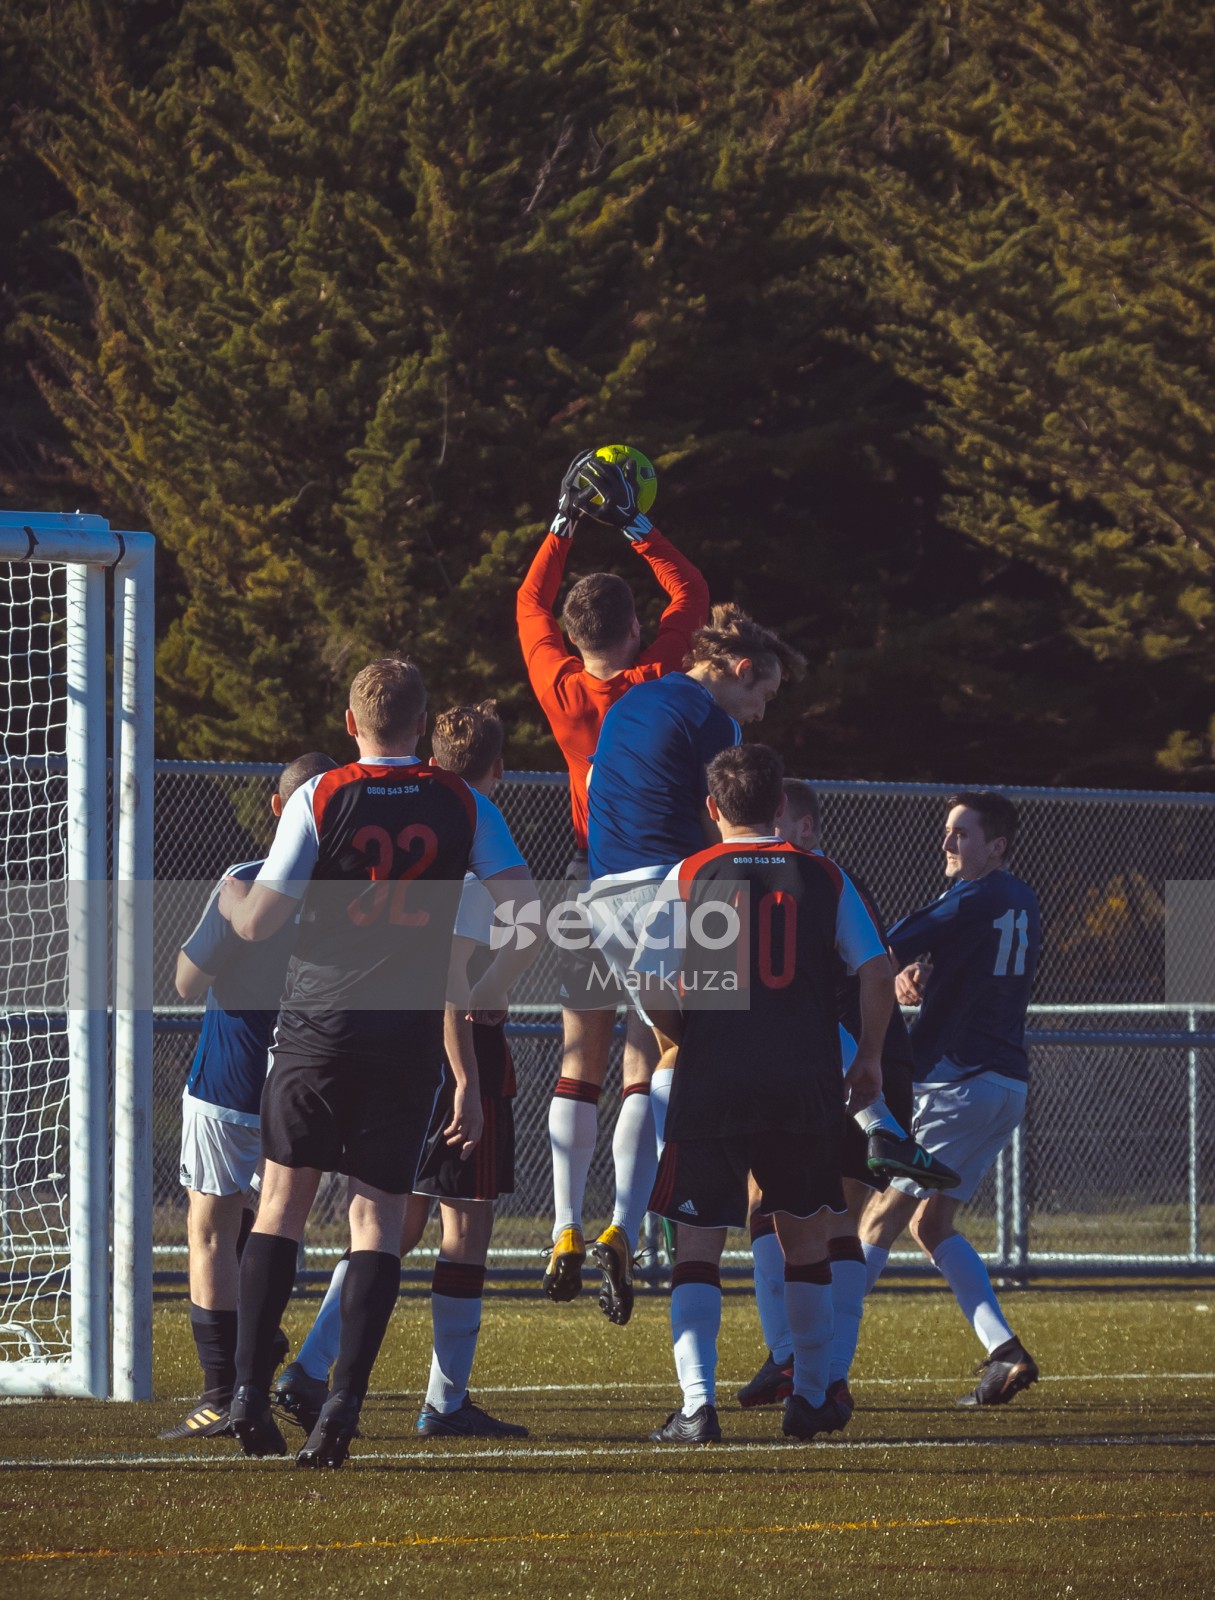 Goalkeeper catches neon yellow football midair - Sports Zone sunday league